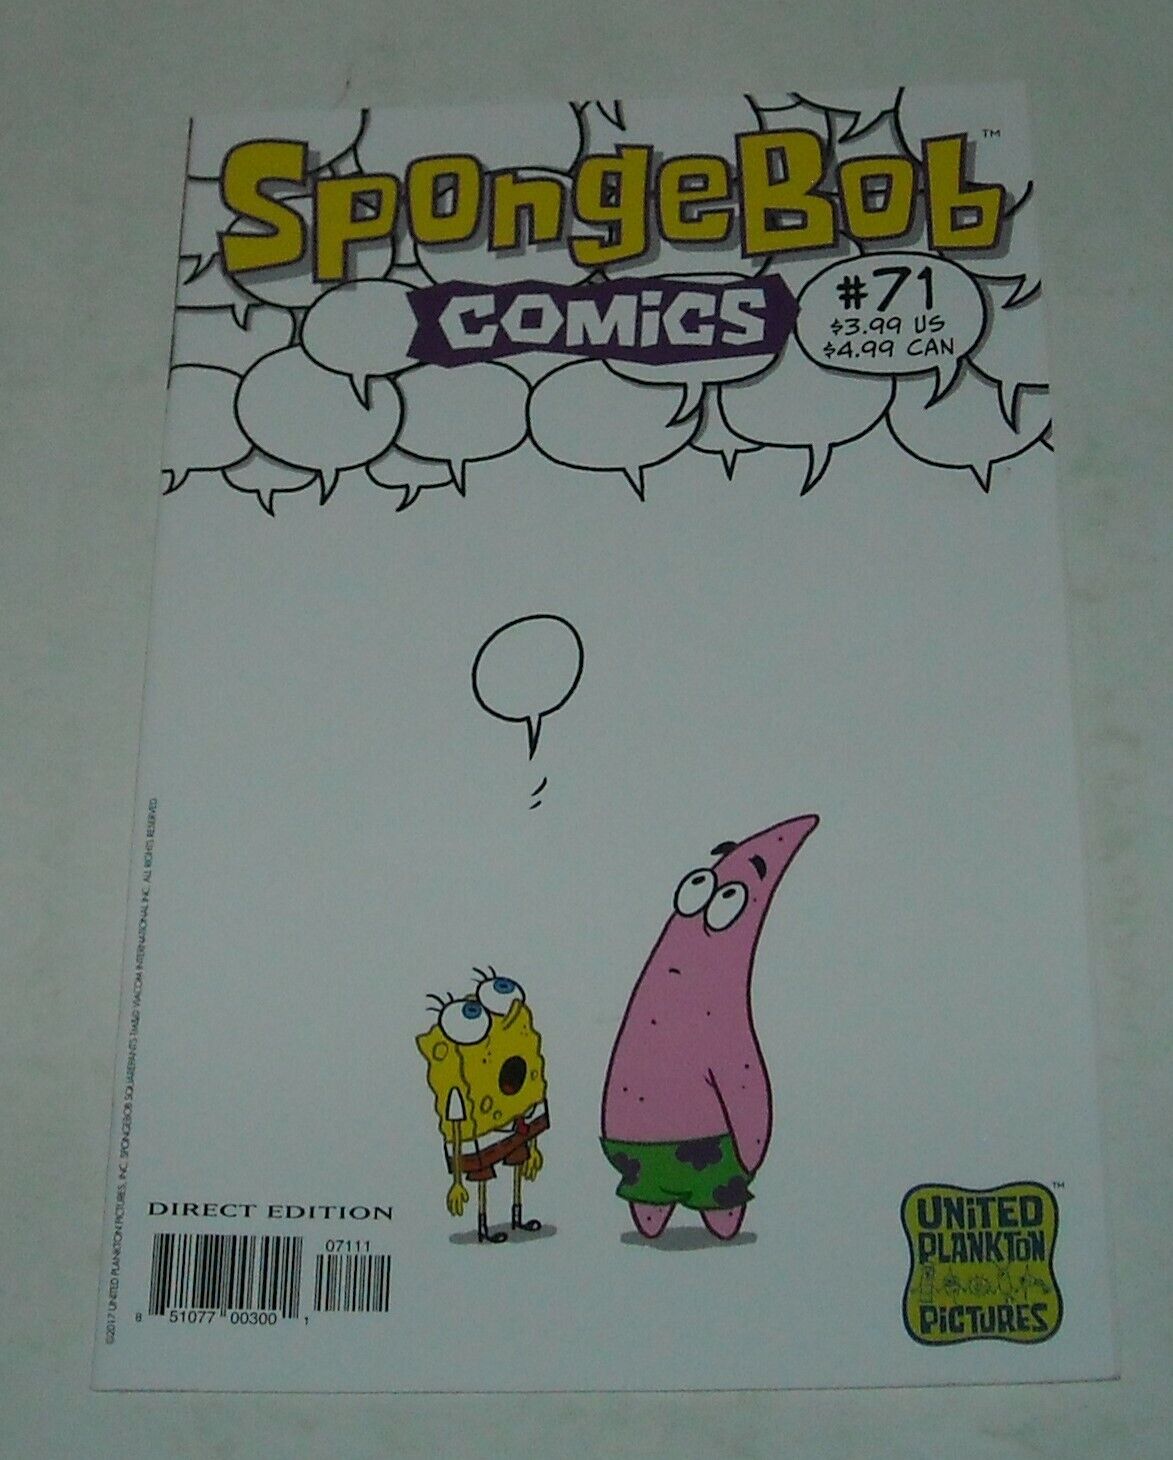 SPONGEBOB COMICS # 71 2017 BONGO TV CARTOON COMIC BOOK UNITED PLANKTON PICTURES